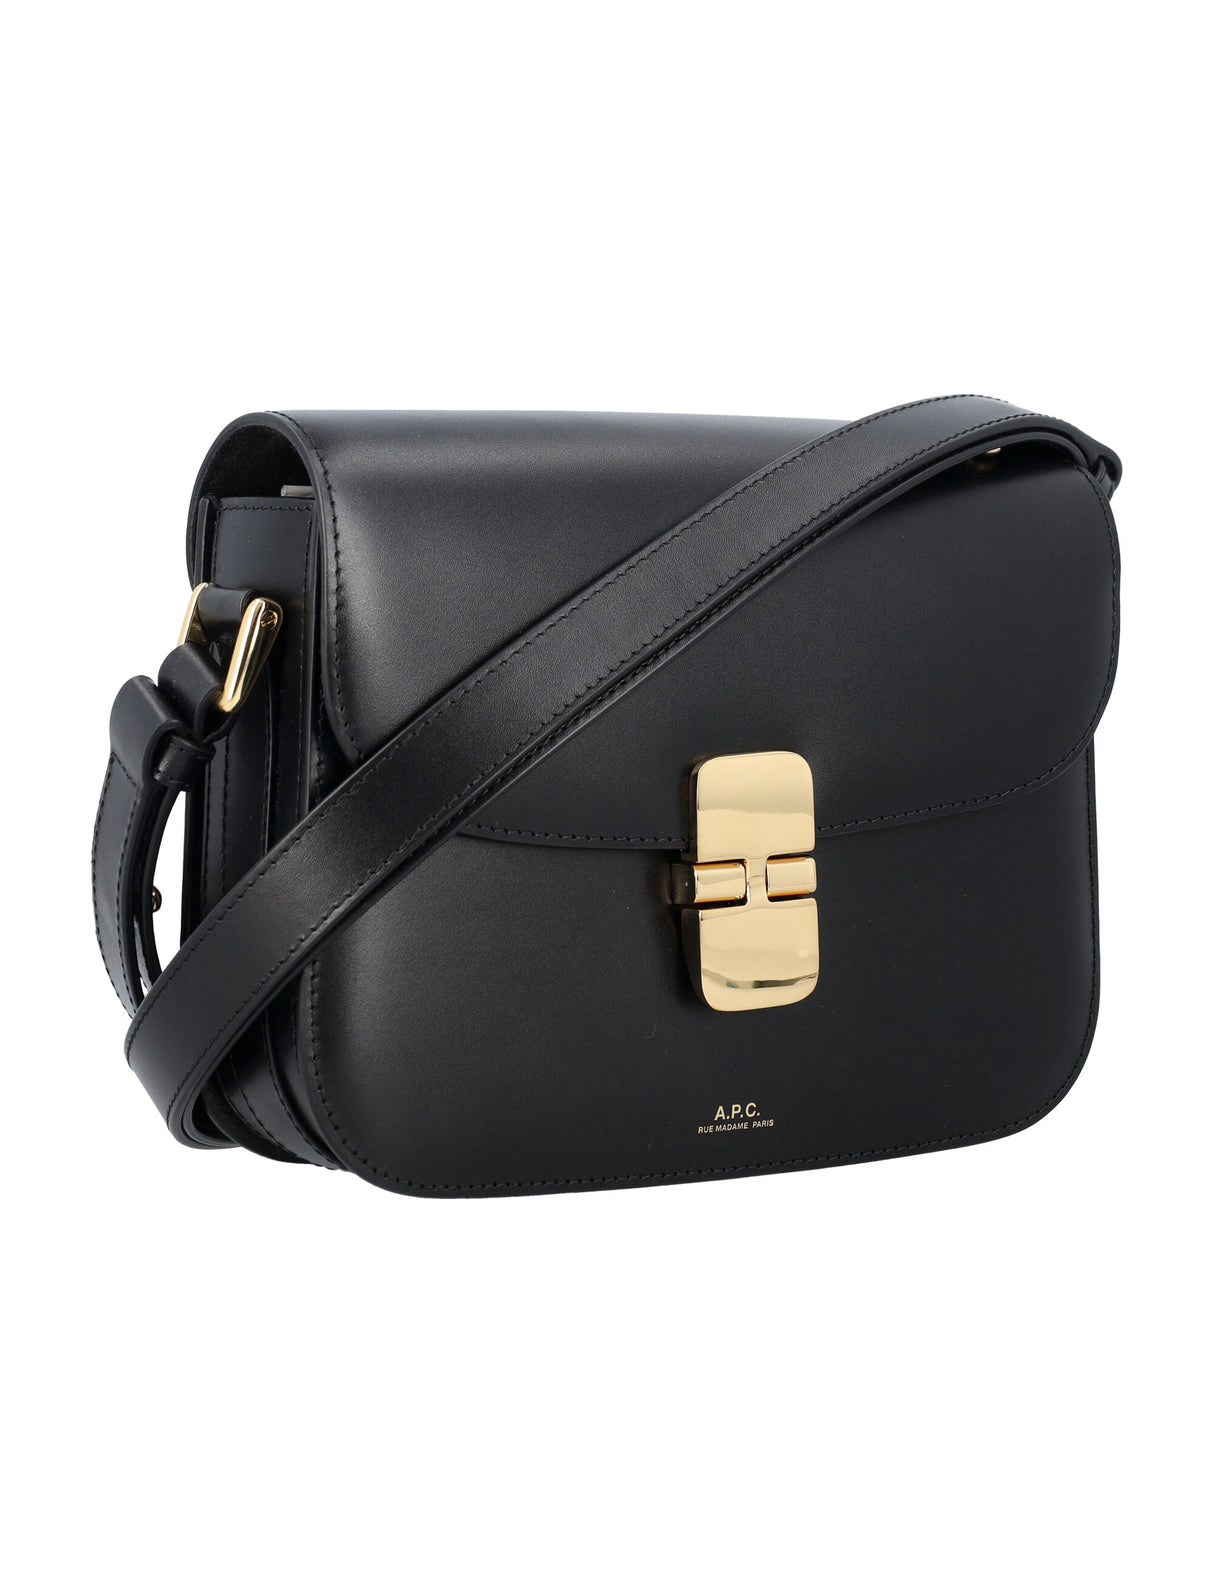 A.P.C. Grace Small Mini Black Leather Handbag with Goldtone Detailing